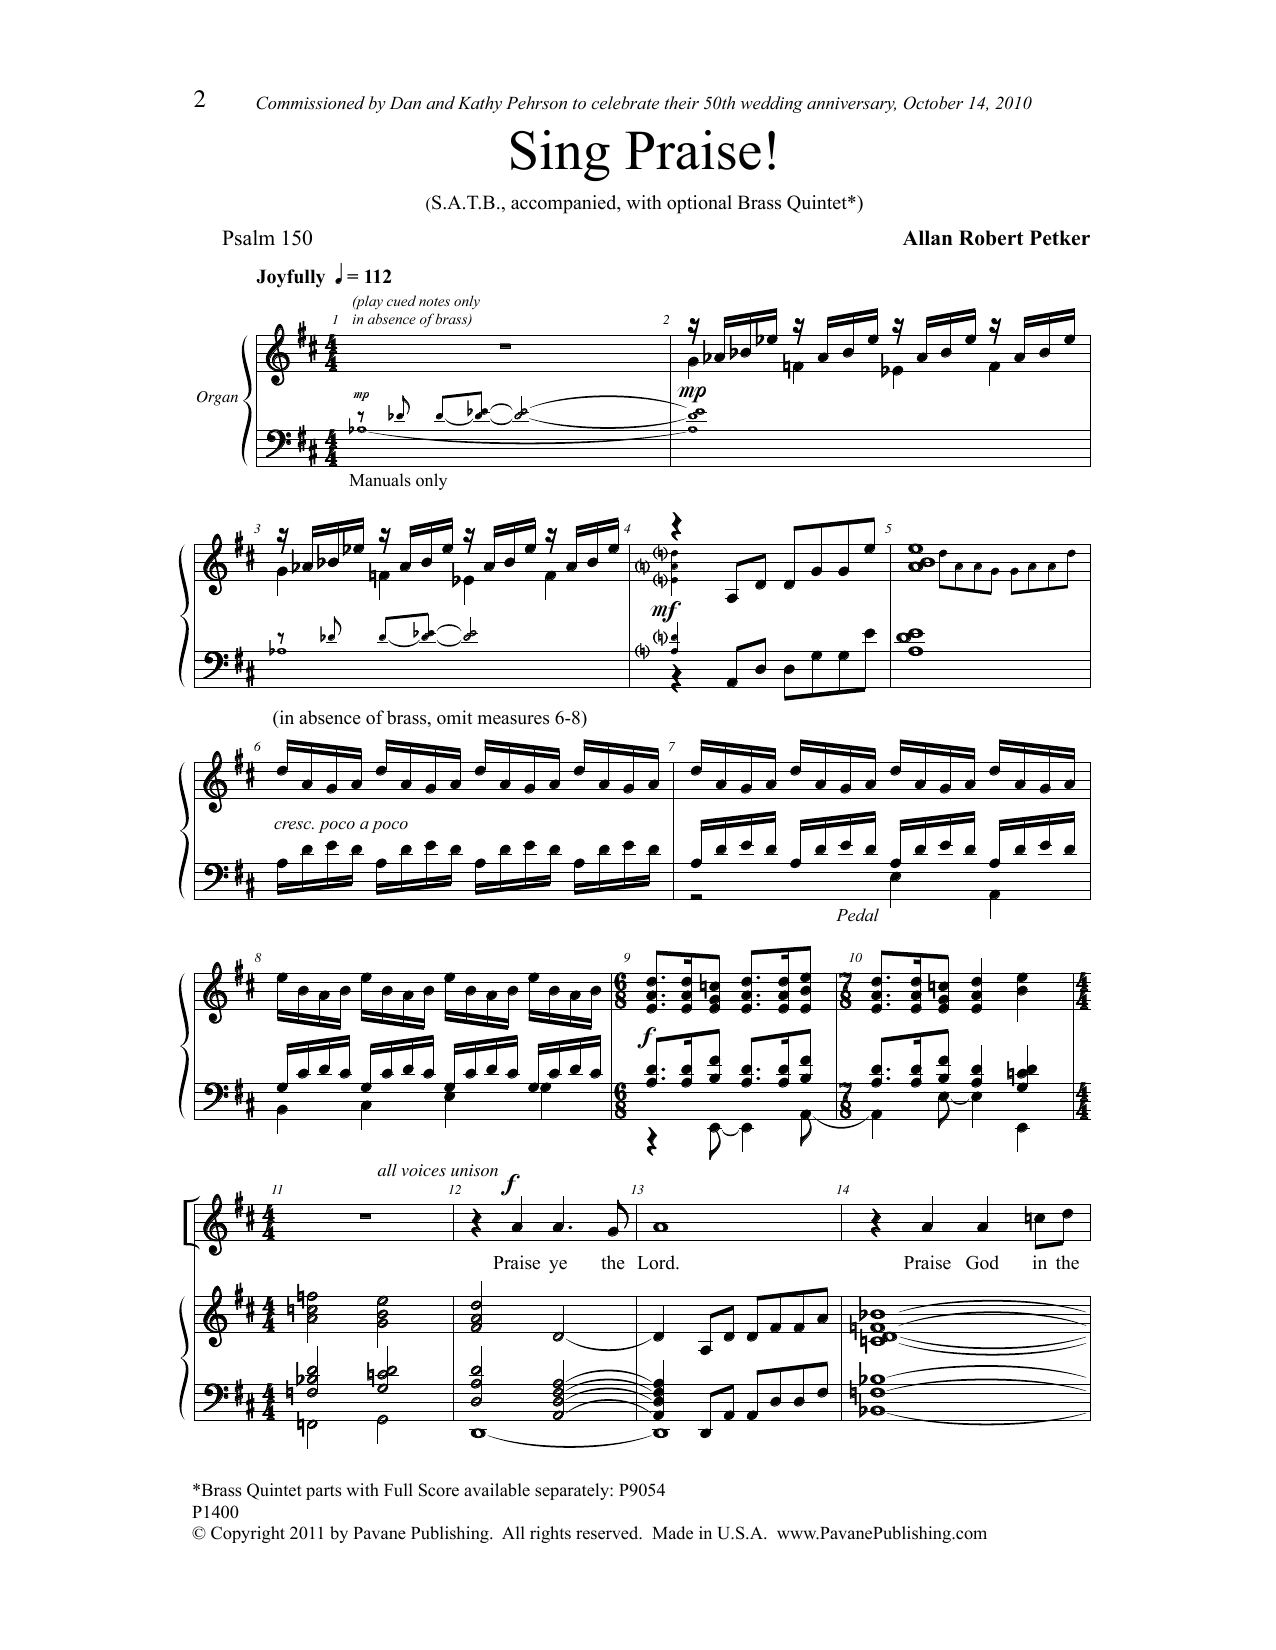 Download Allan Robert Petker Sing Praise! Sheet Music and learn how to play SATB Choir PDF digital score in minutes